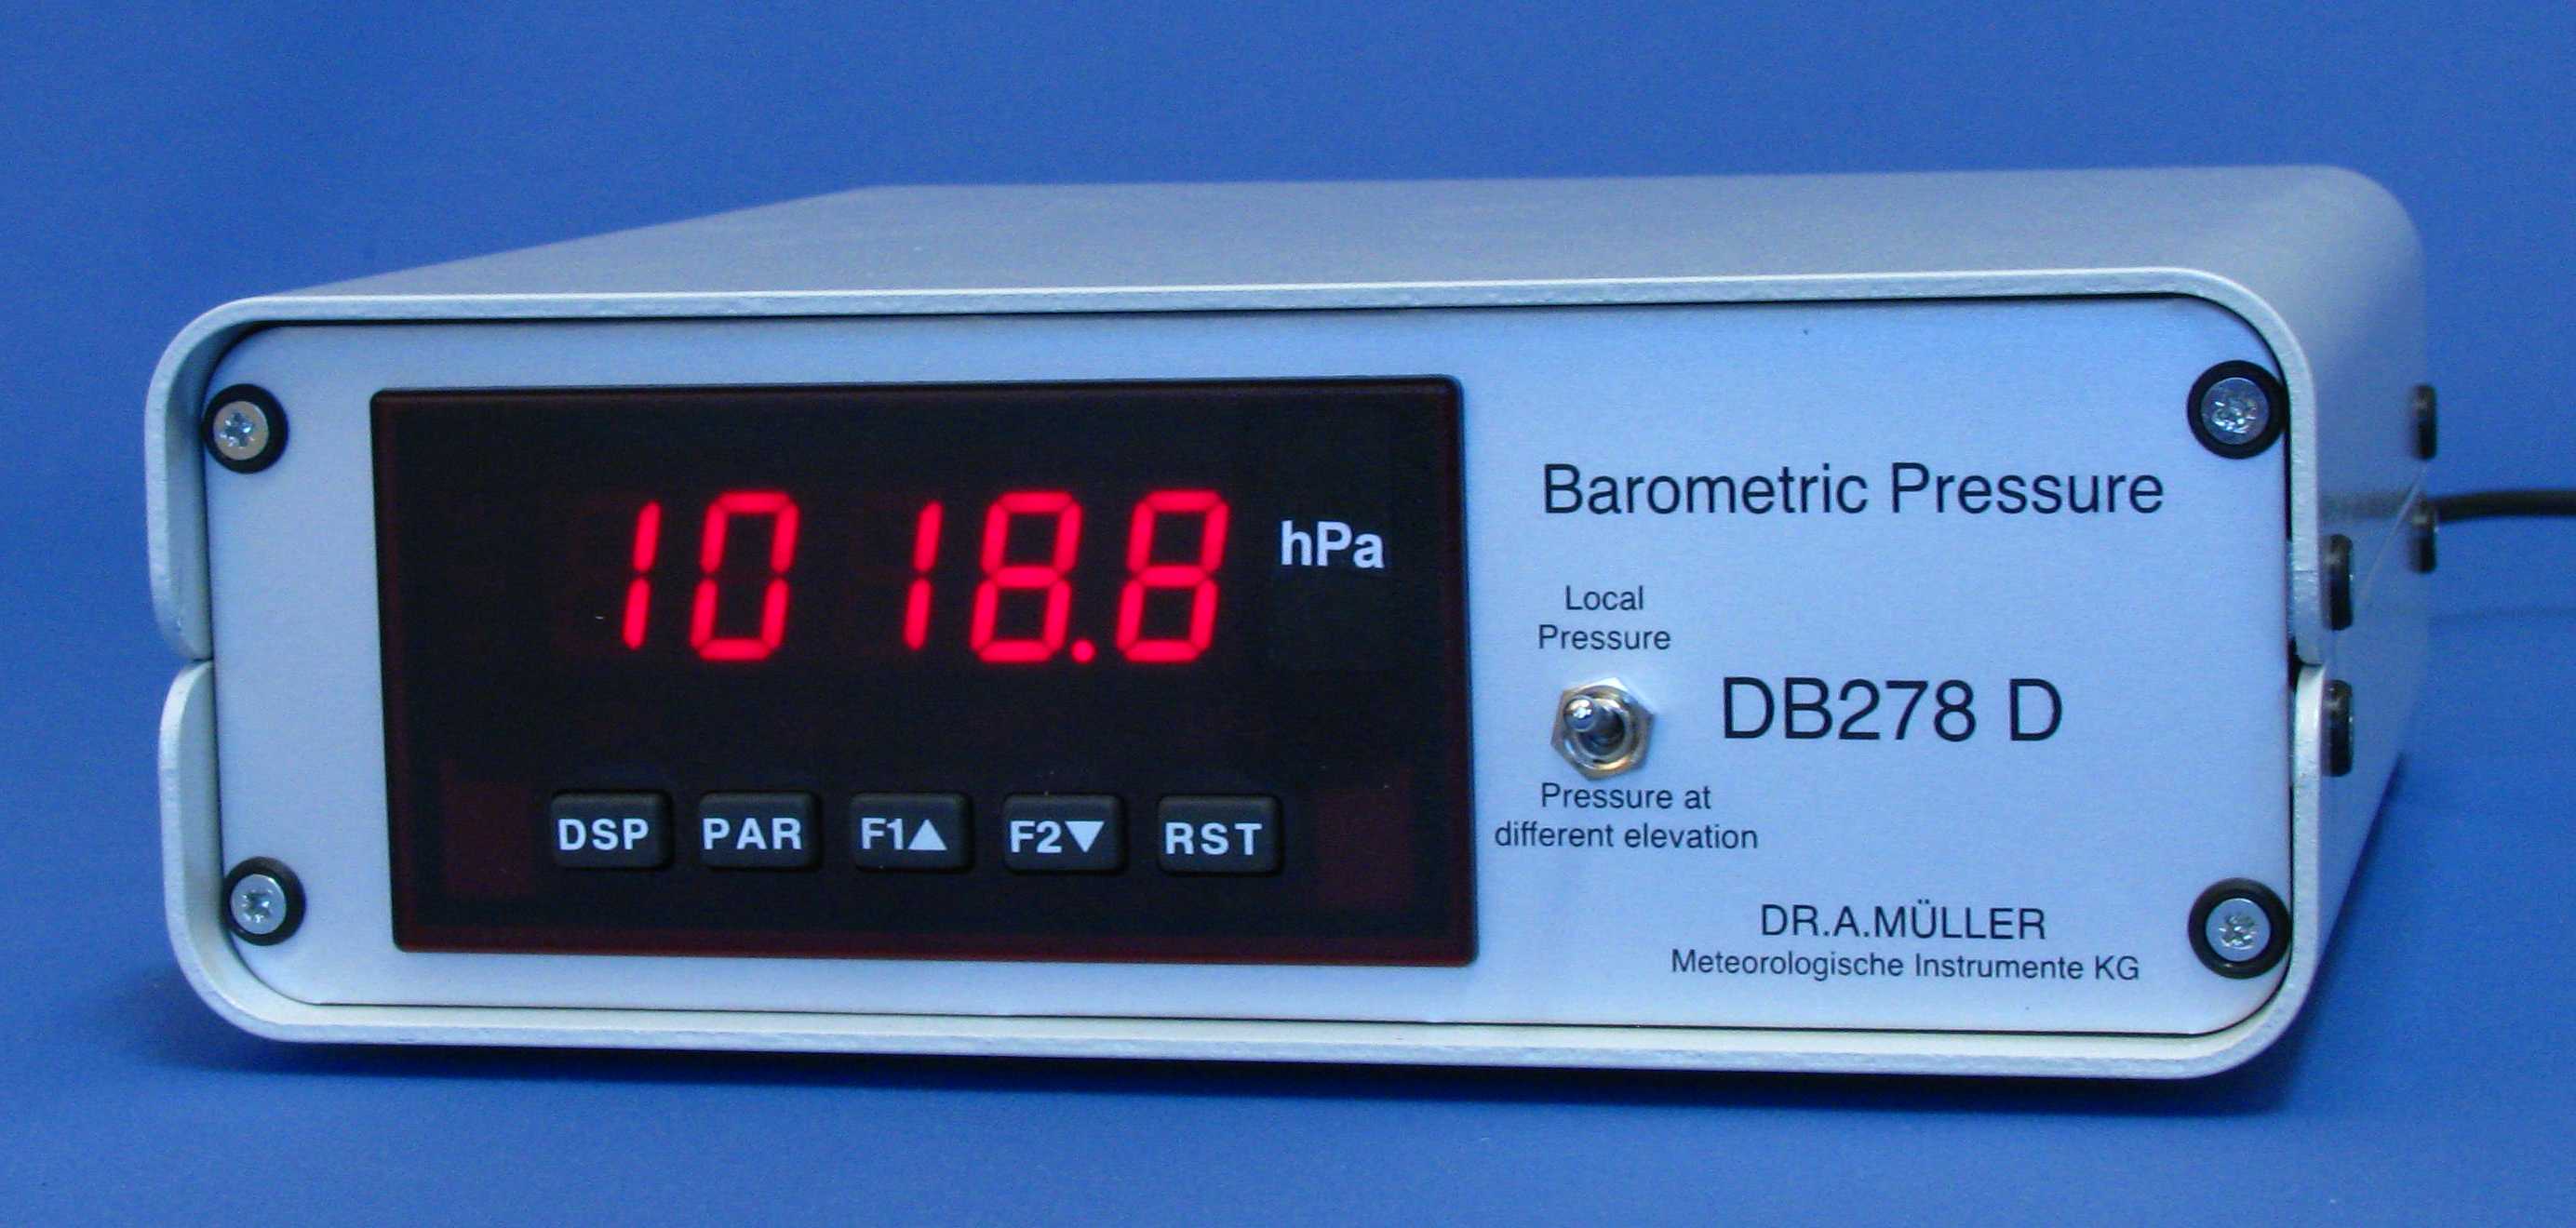 DB278 D - Digital Barometer